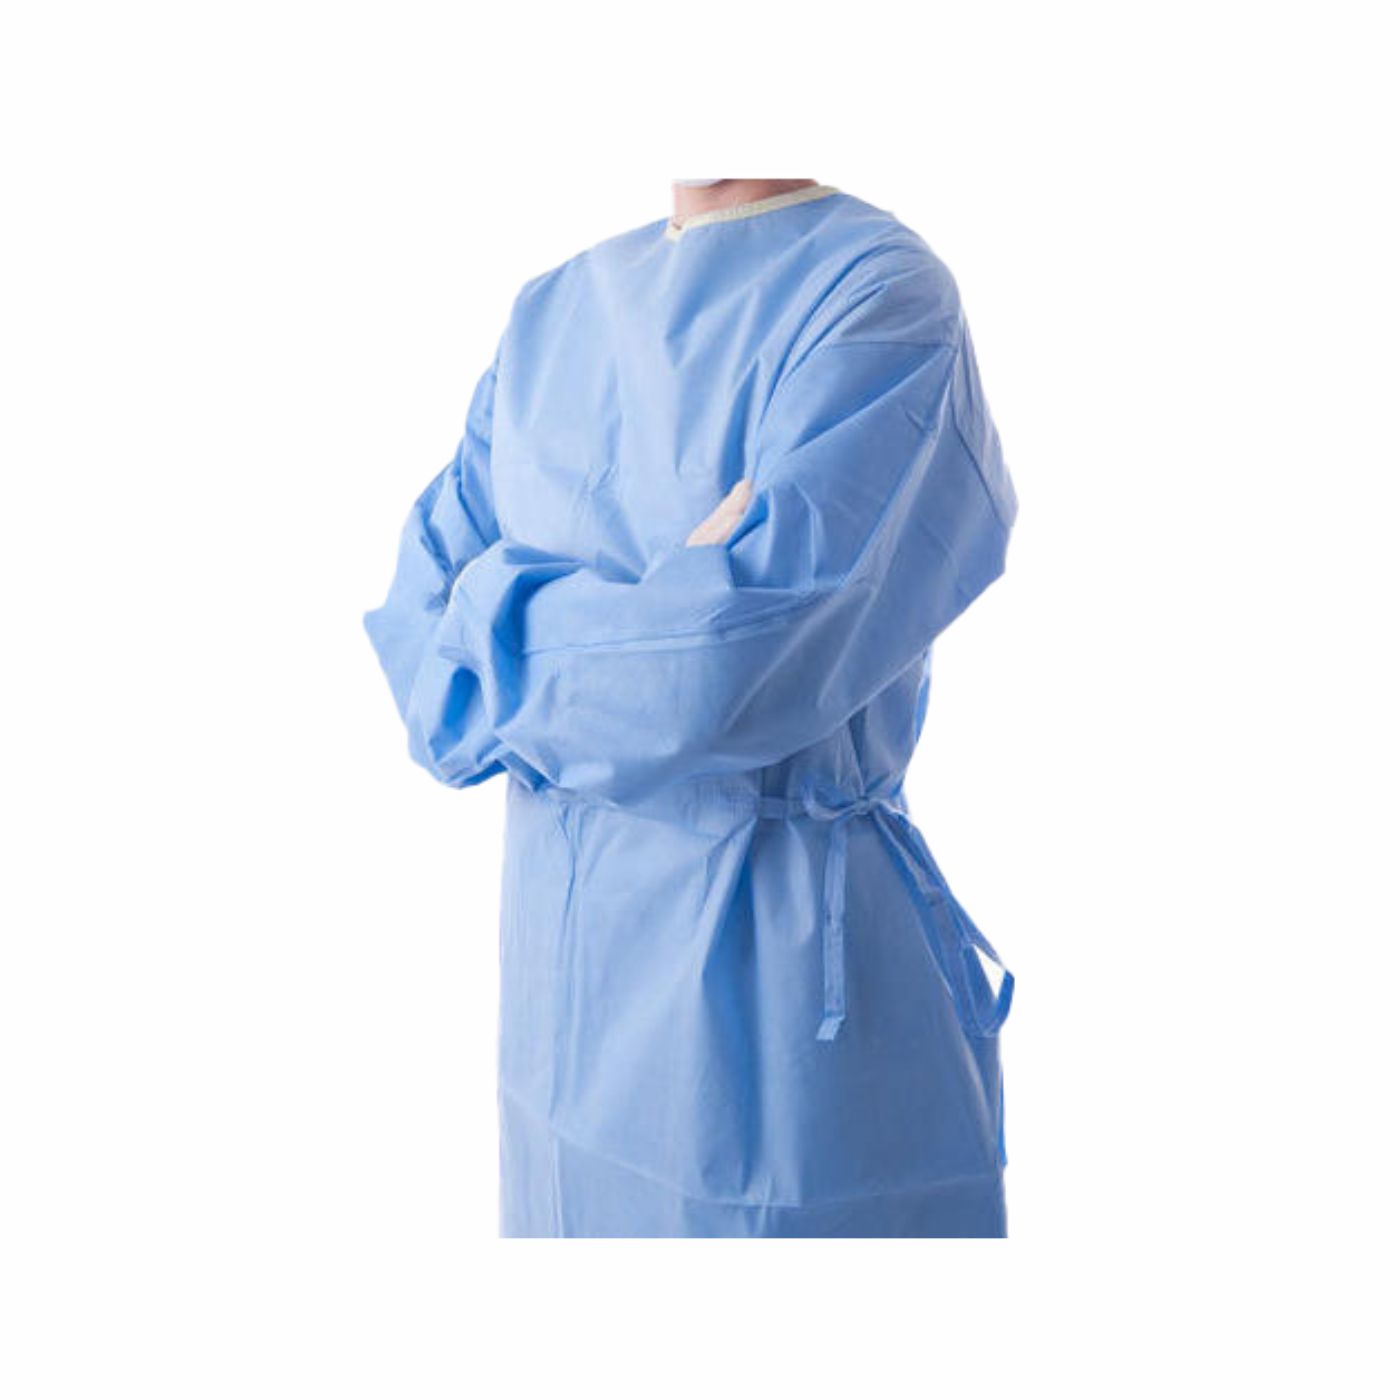 Doctors surgery gown